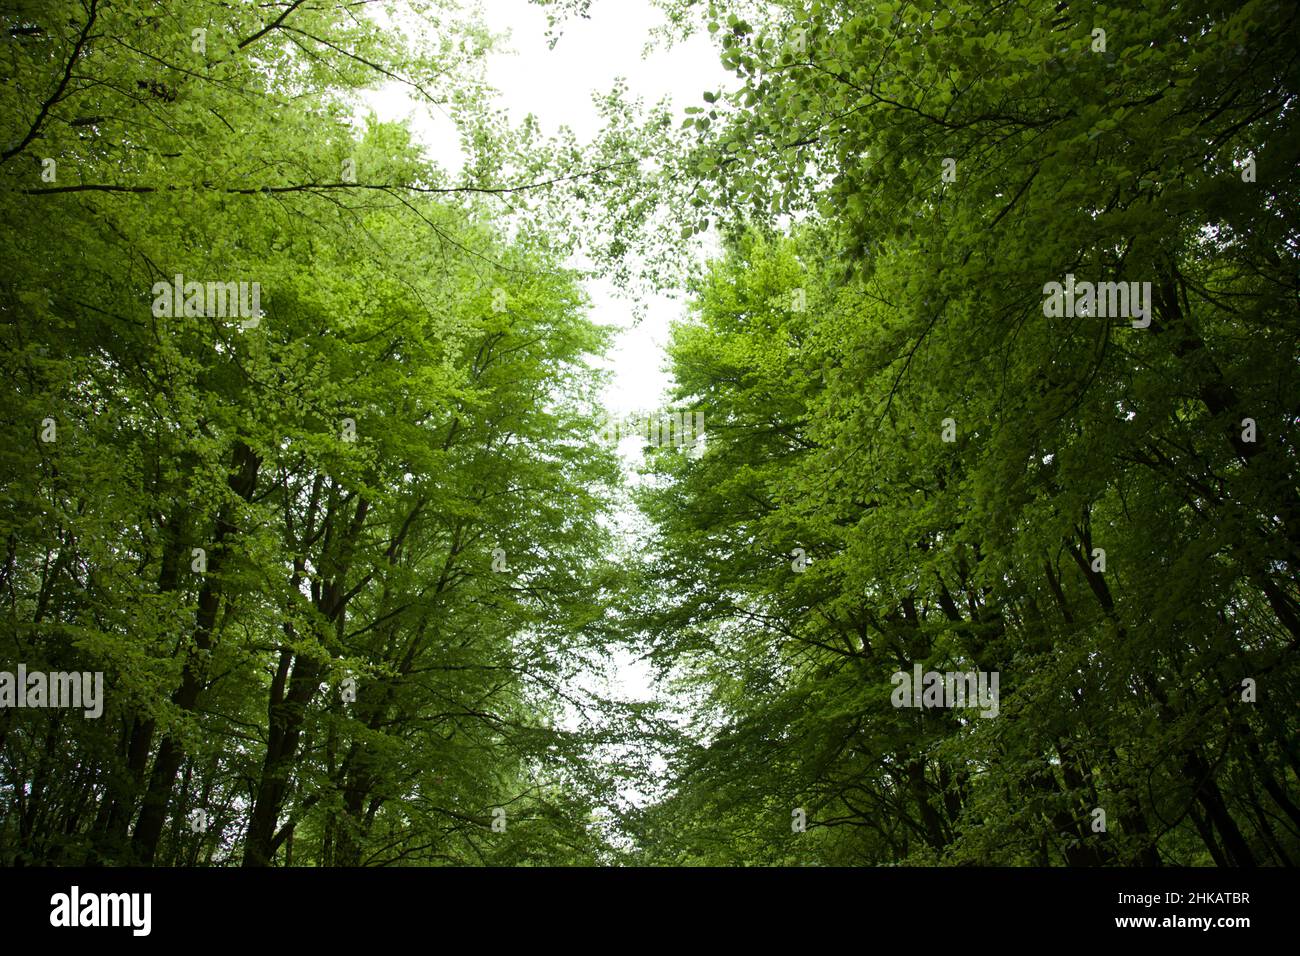 A feeling of vertigo, looking up at tall trees in full, dense Spring foliage Stock Photo